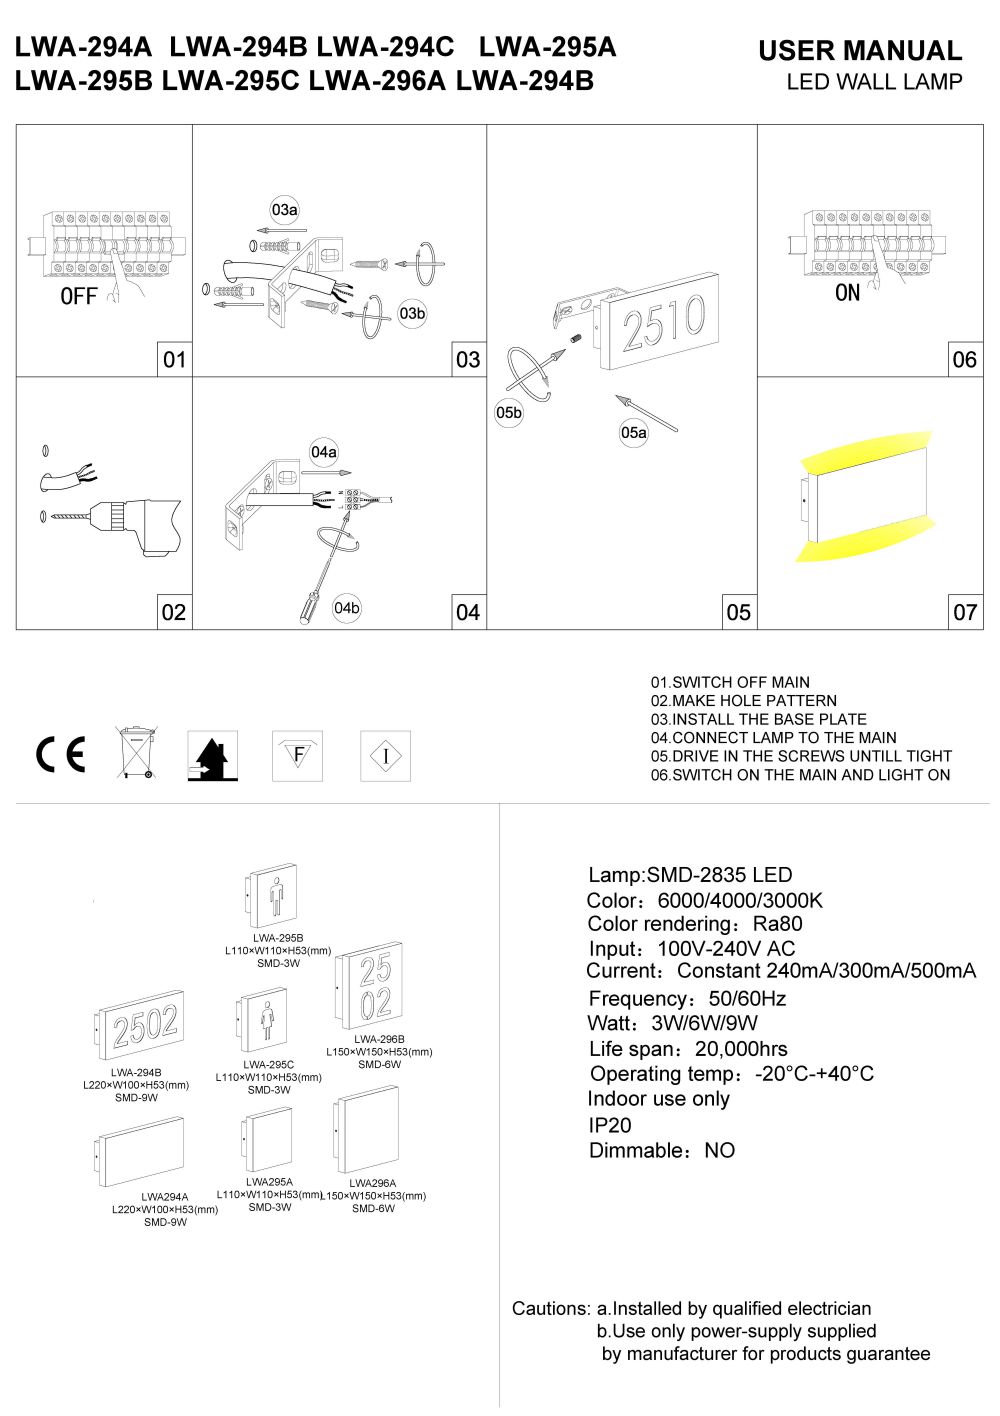 LWA295 4 Watt square illuminated LED washroom sign installation guide